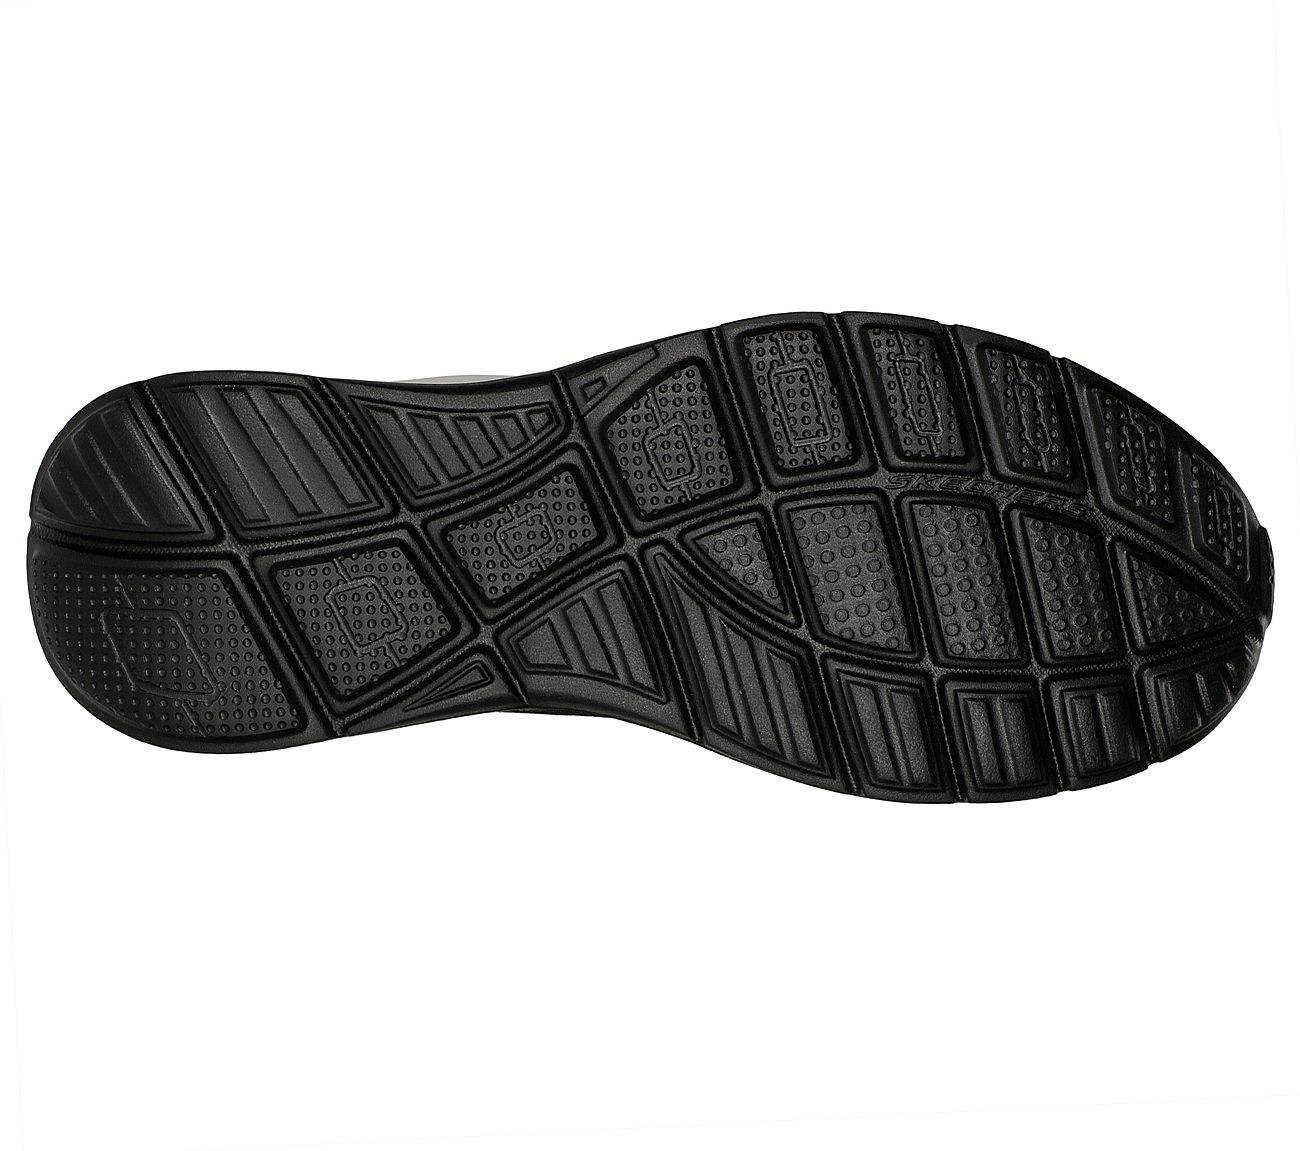 EQUALIZER 5, BLACK/WHITE Footwear Bottom View